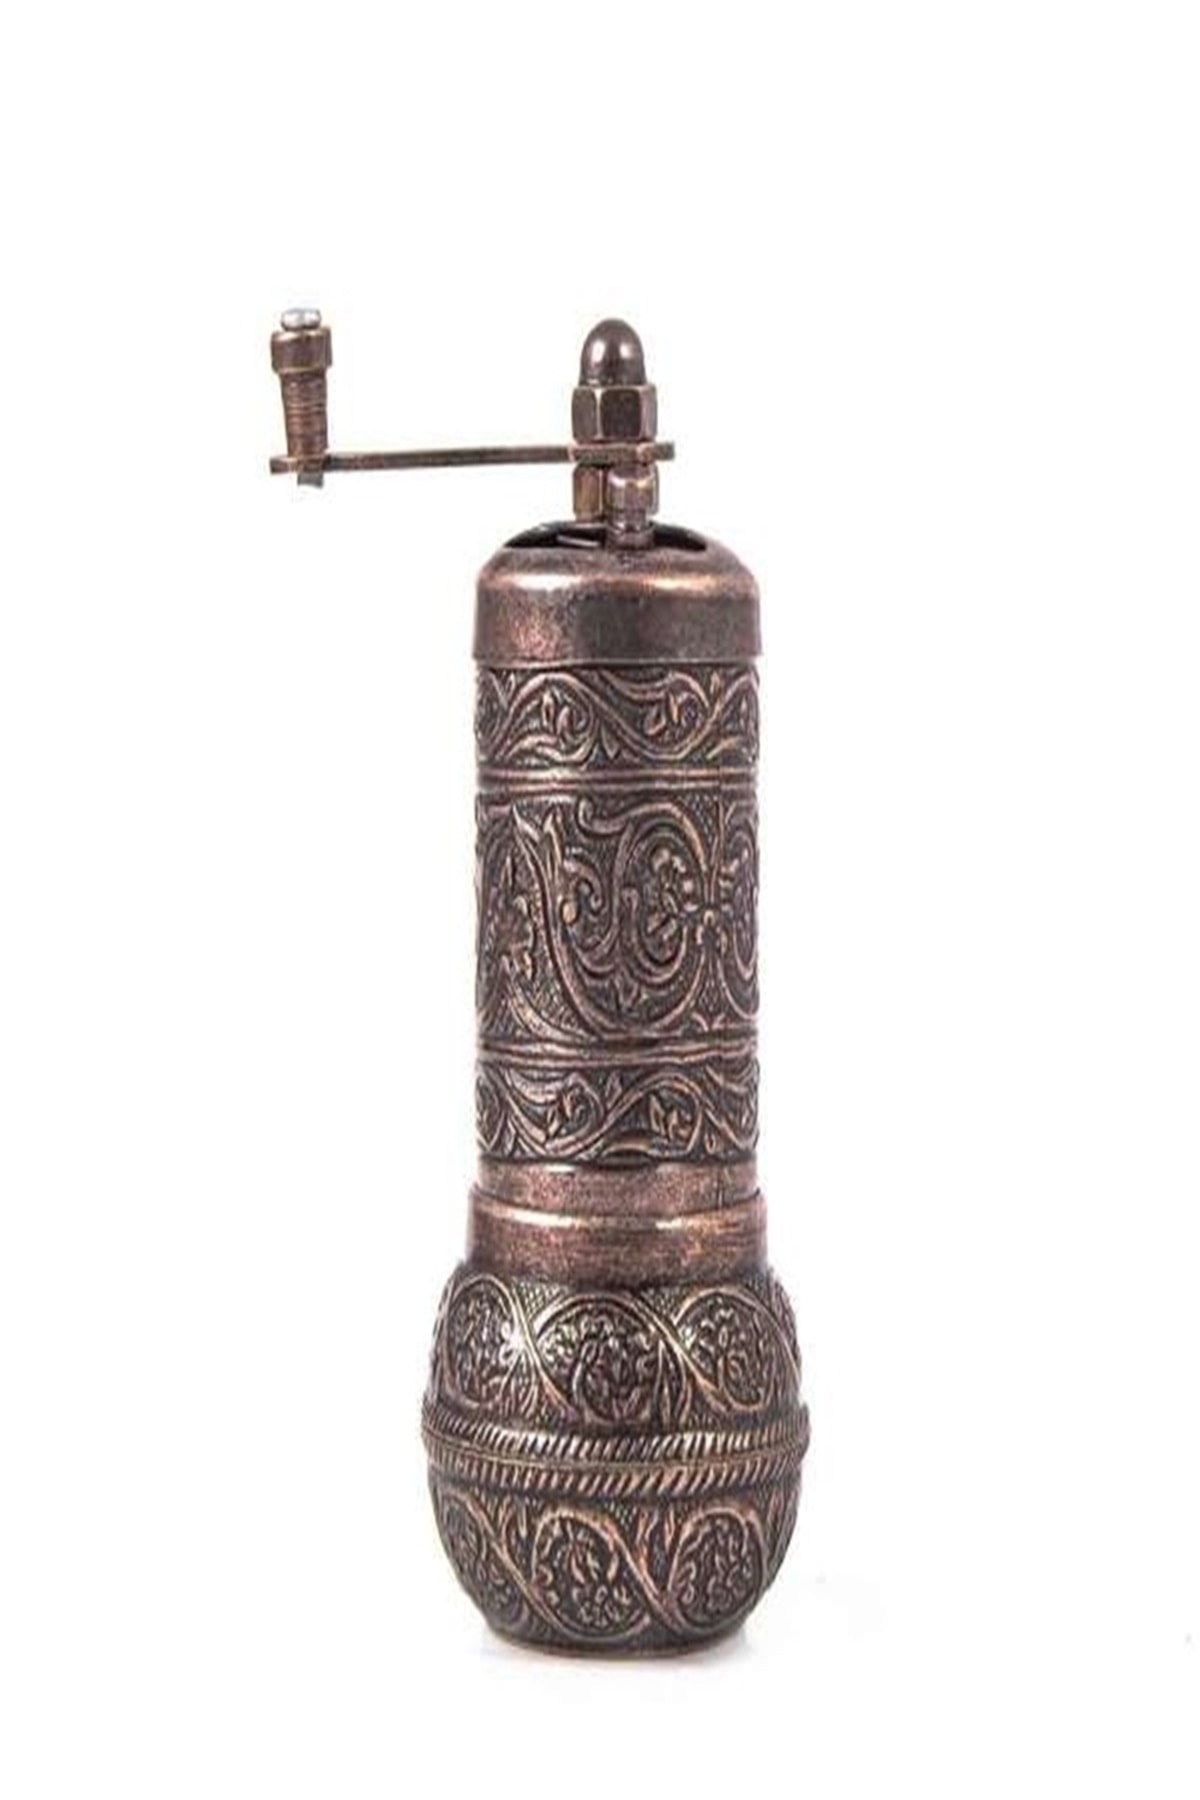 https://www.theottomanbazaar.com/spice-grinder-brown-color-spice-grinder-manual-576-37-O.jpg